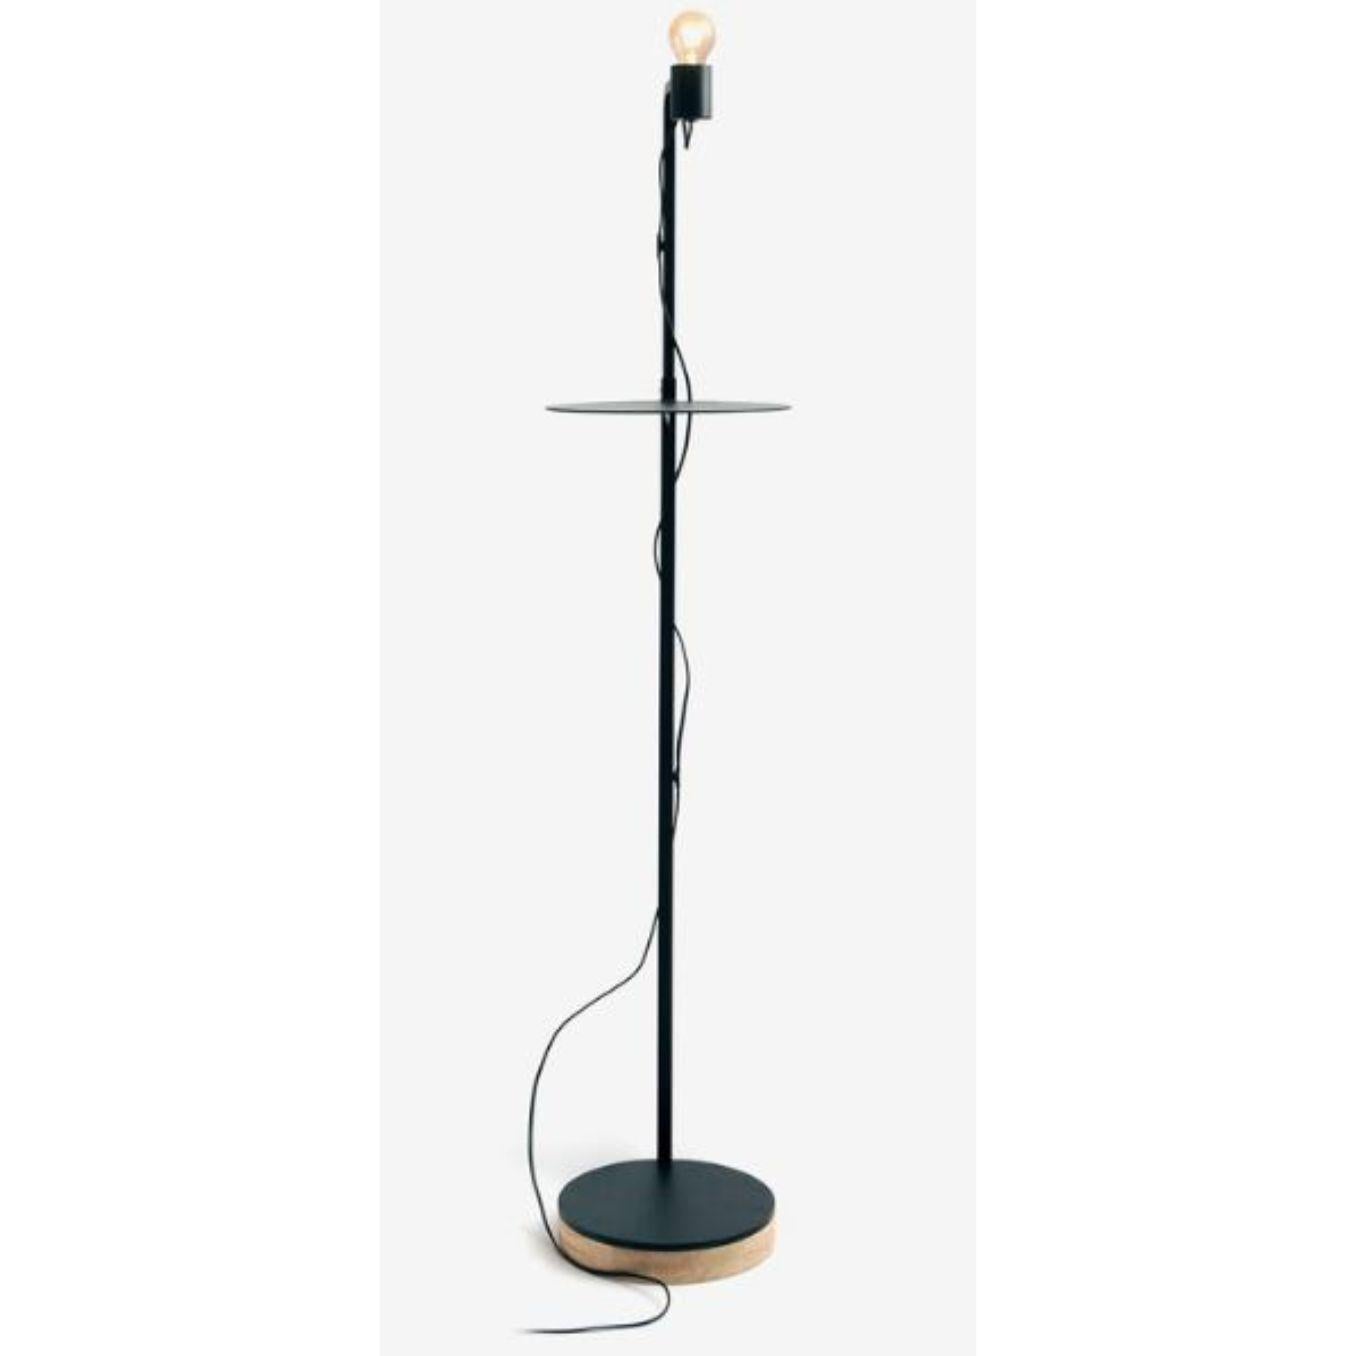 Modern Grafit Floor Lamp with Shelf by RADAR For Sale